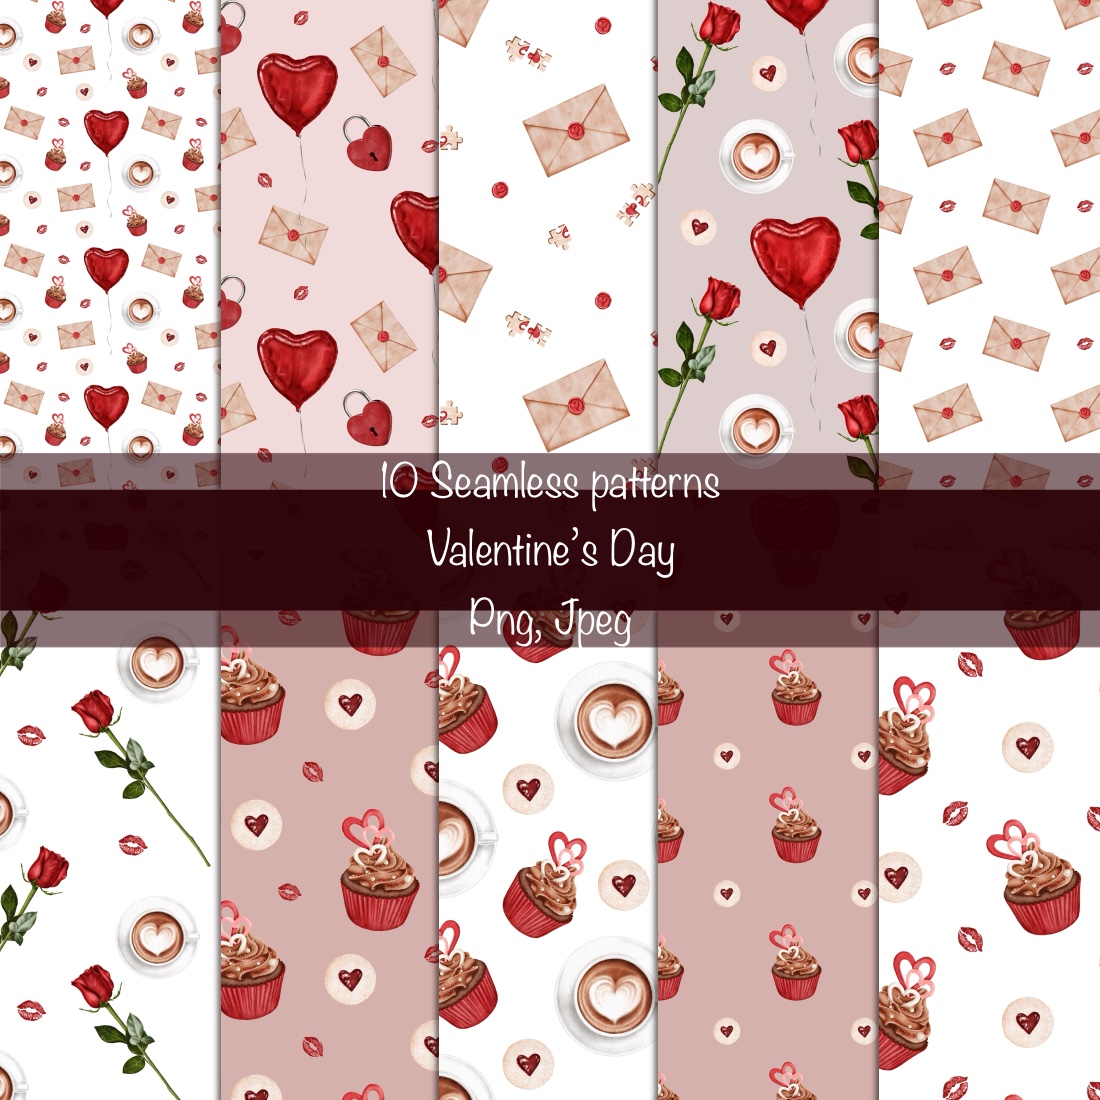 3 Seamless patterns for Valentine's Day - MasterBundles